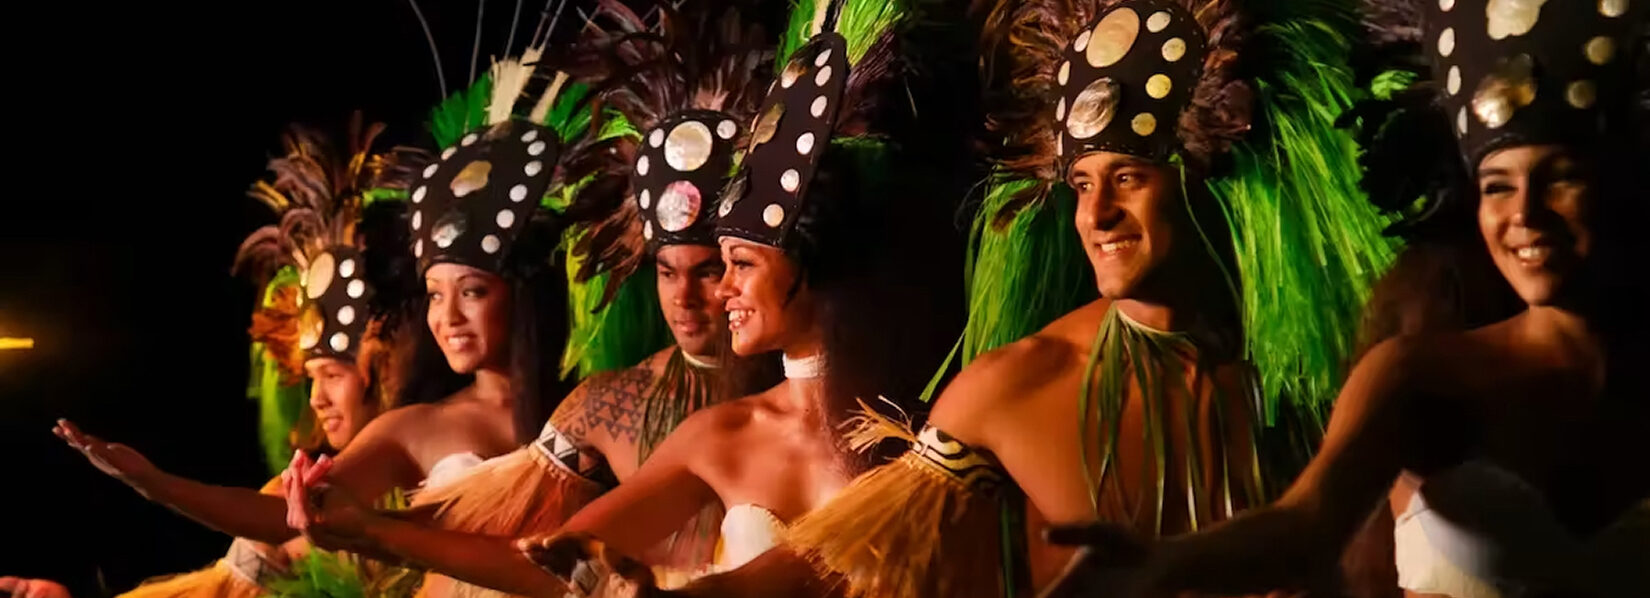 Luau Kalamaku dancers smile on stage in elaborate costumes.